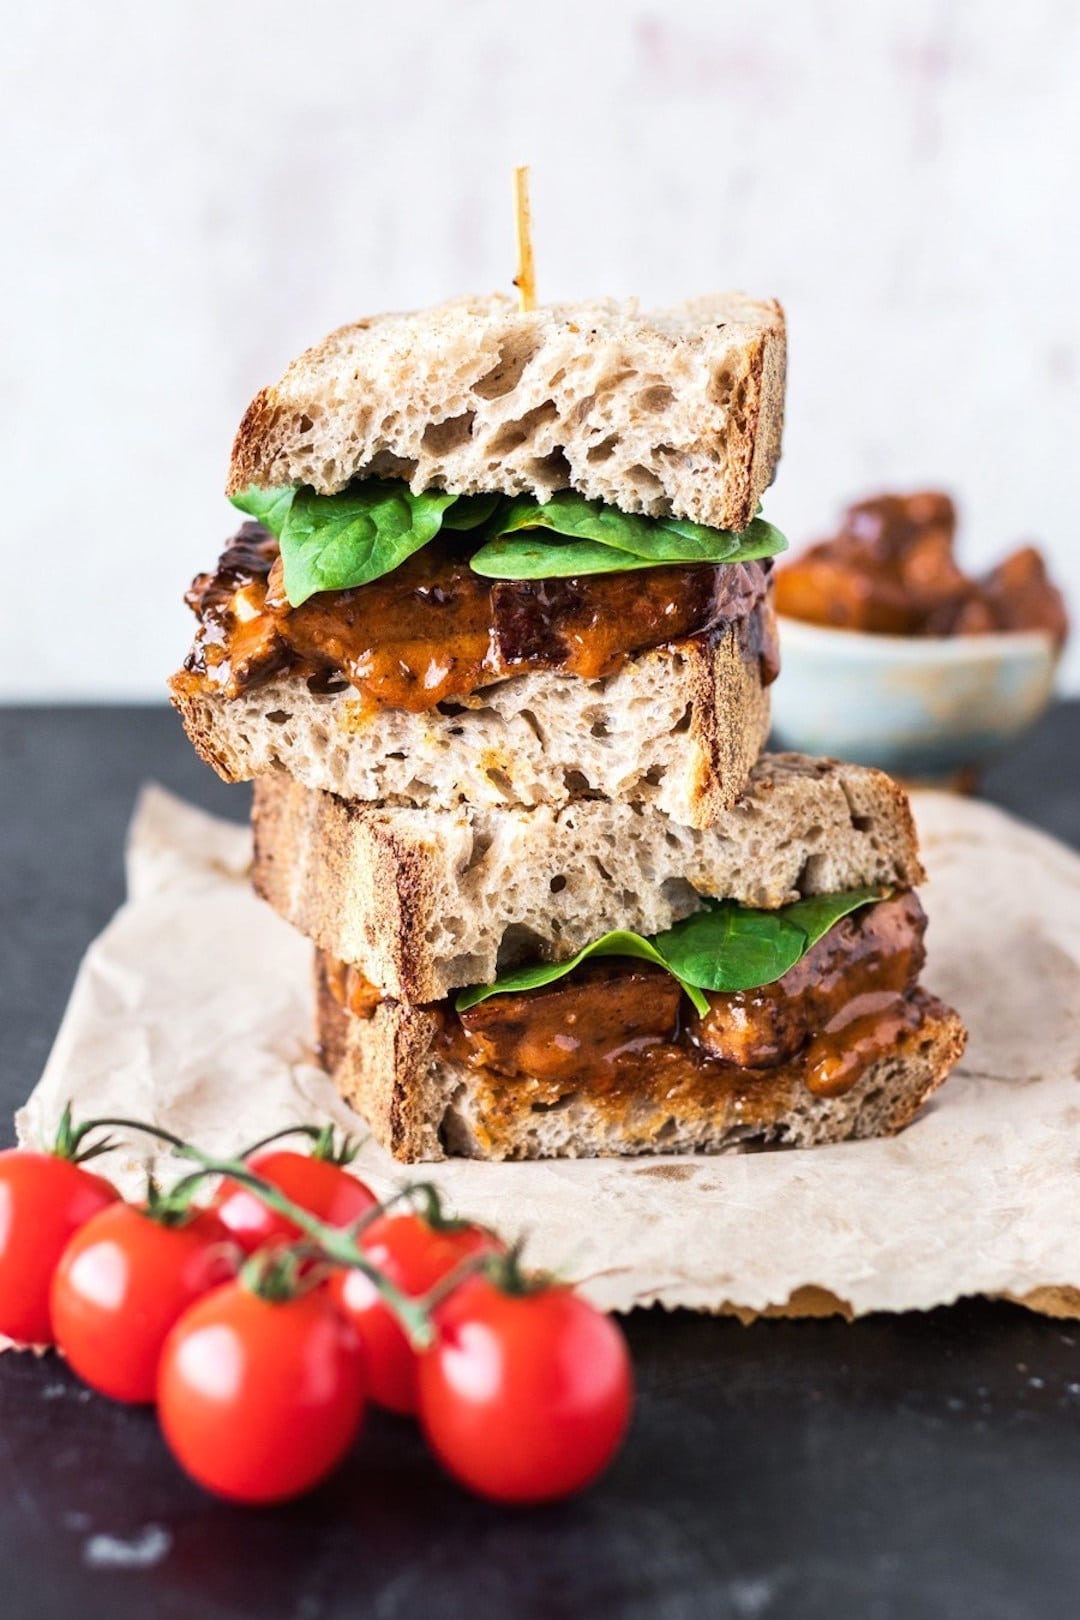 11 Yummy Plant Based Sandwiches - Vegan Buffalo Chicken Sandwich by This Vibrant World